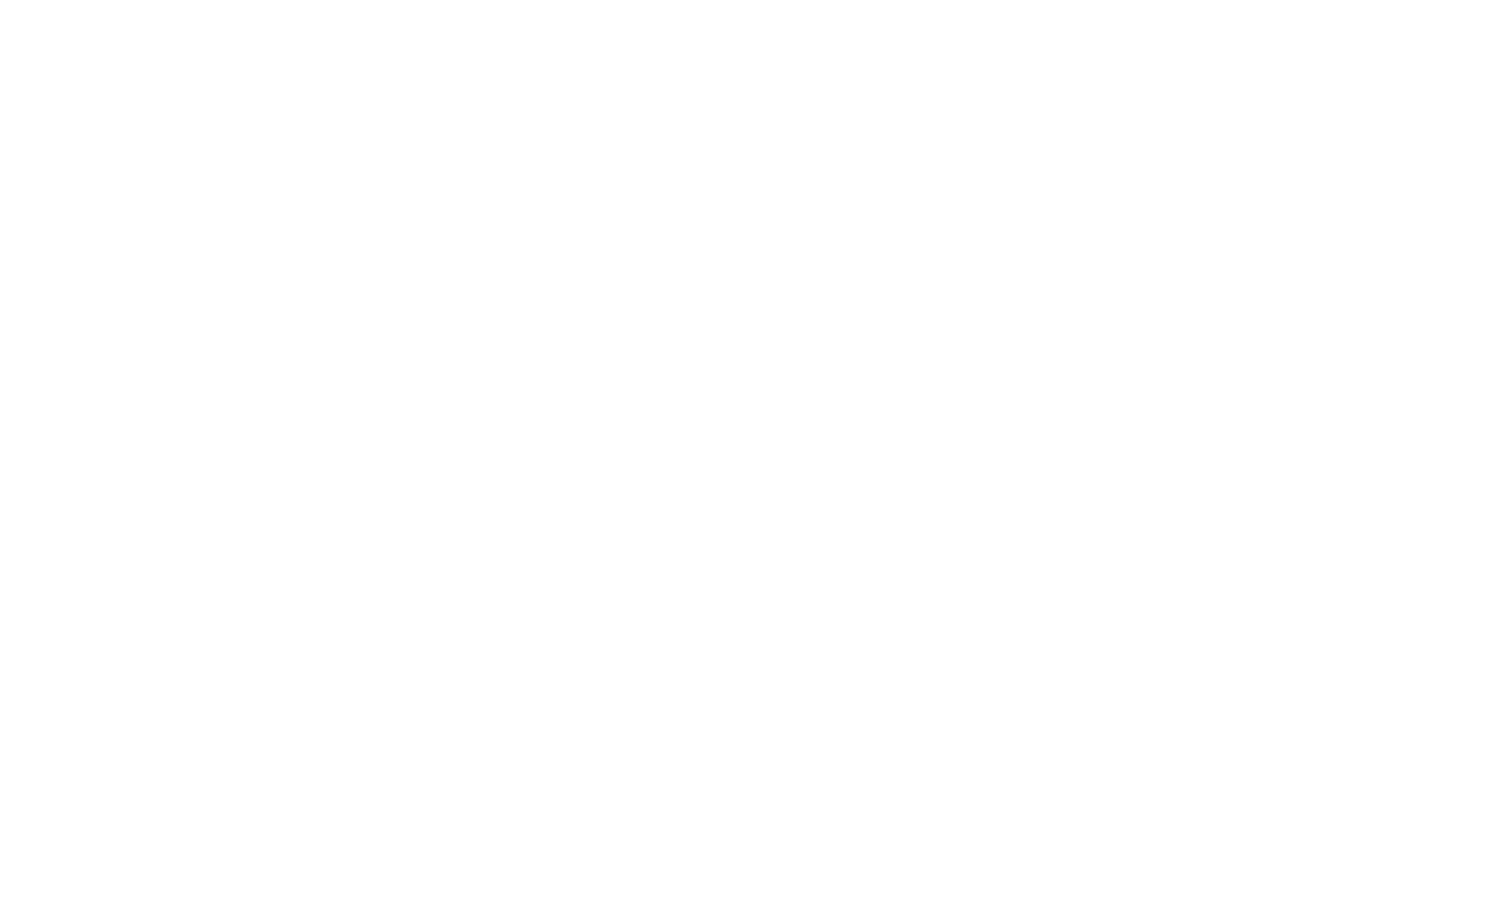 Digital Twin Studios